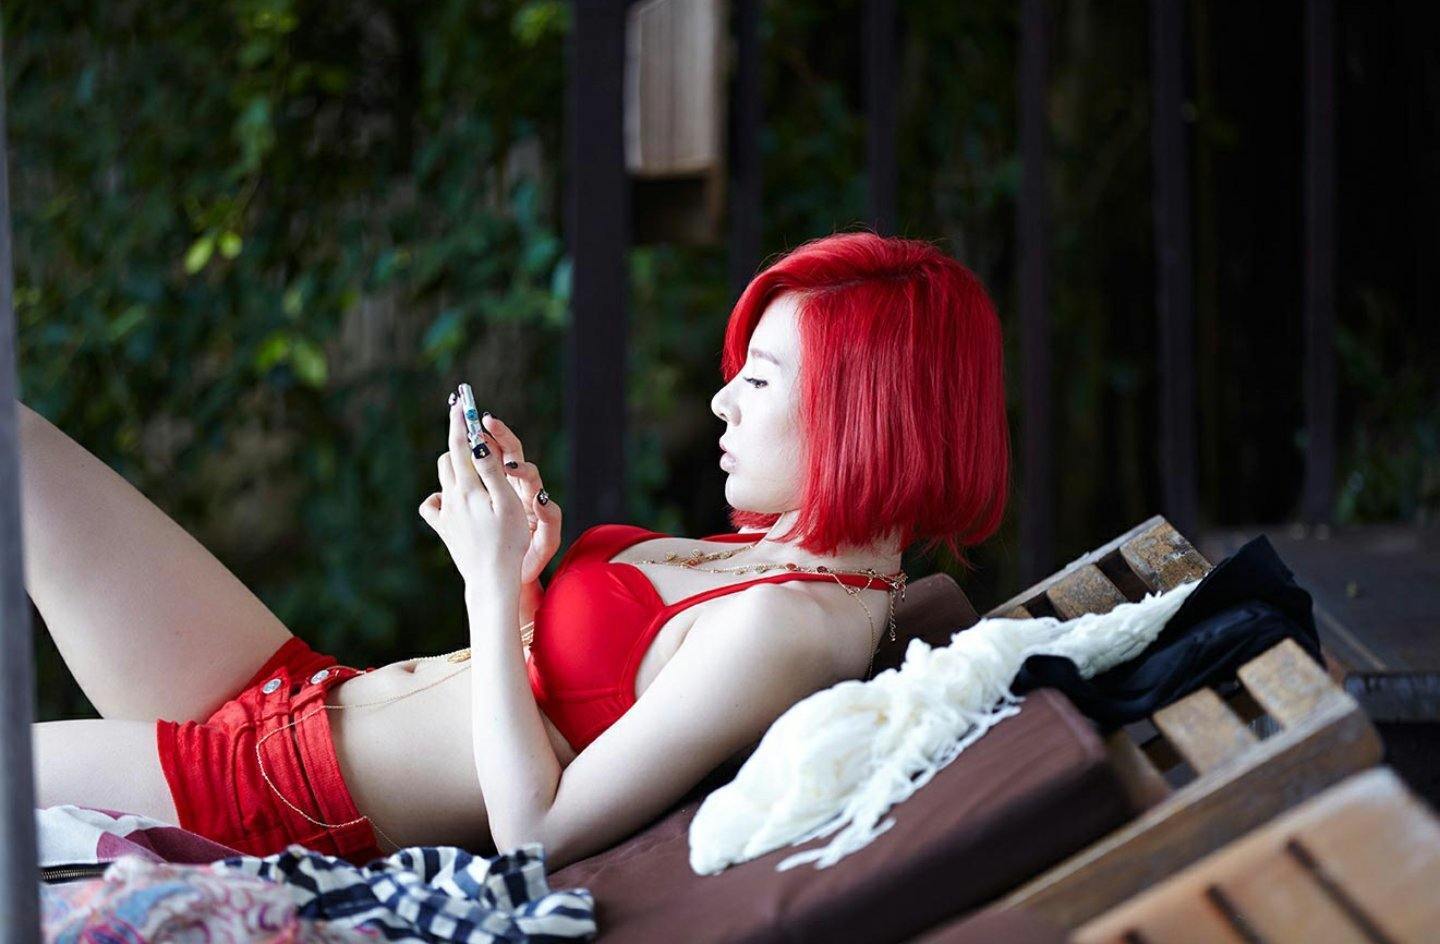 Fans Uncover Photos Of Sunny Sunbathing In A Bikini - Koreaboo